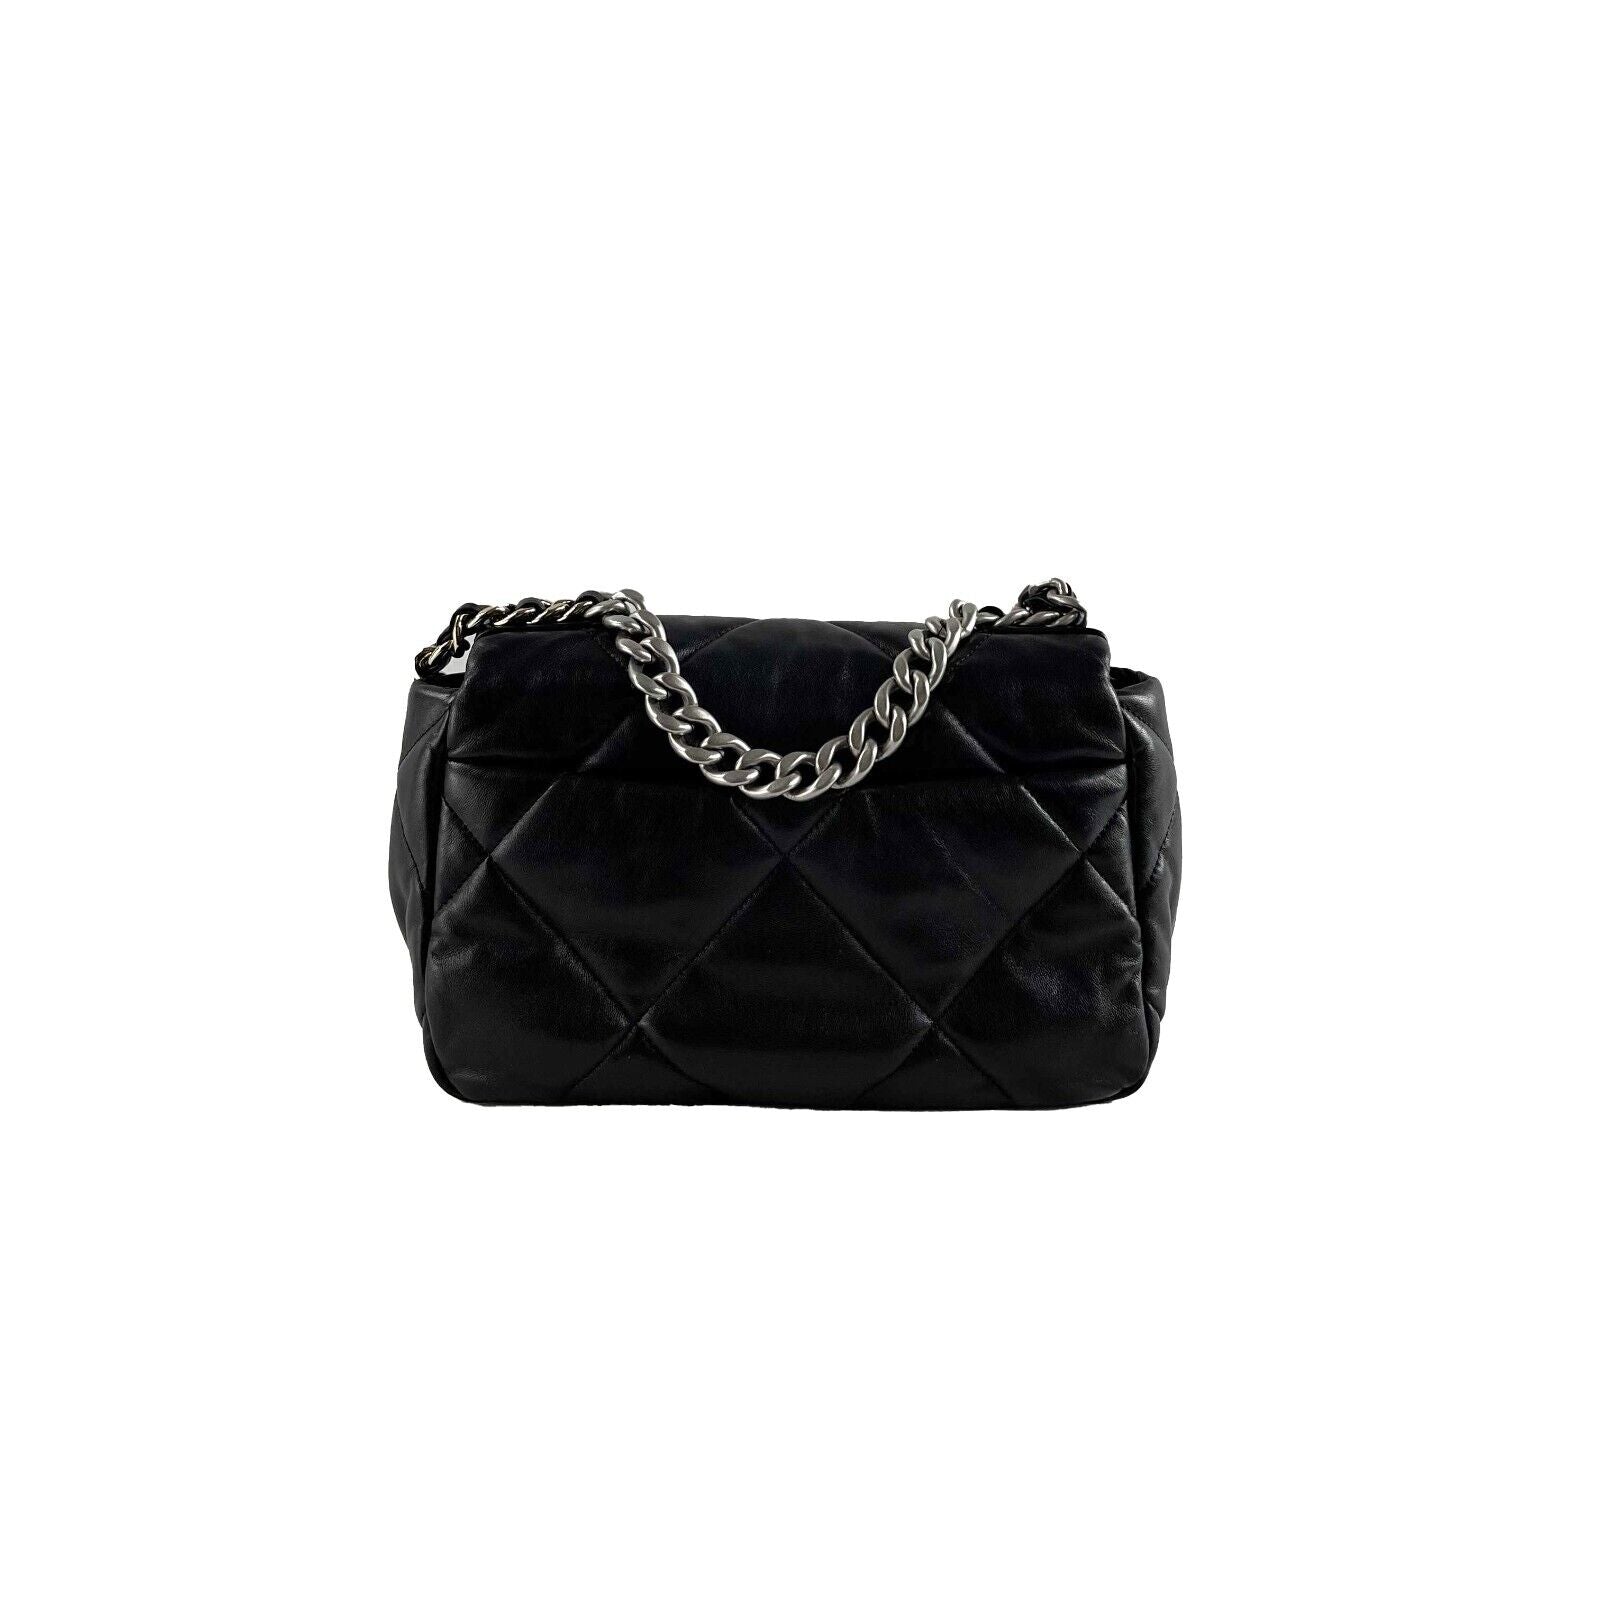 CHANEL - NEW Chanel 19 Medium CC Lambskin Black Flap Shoulder Bag